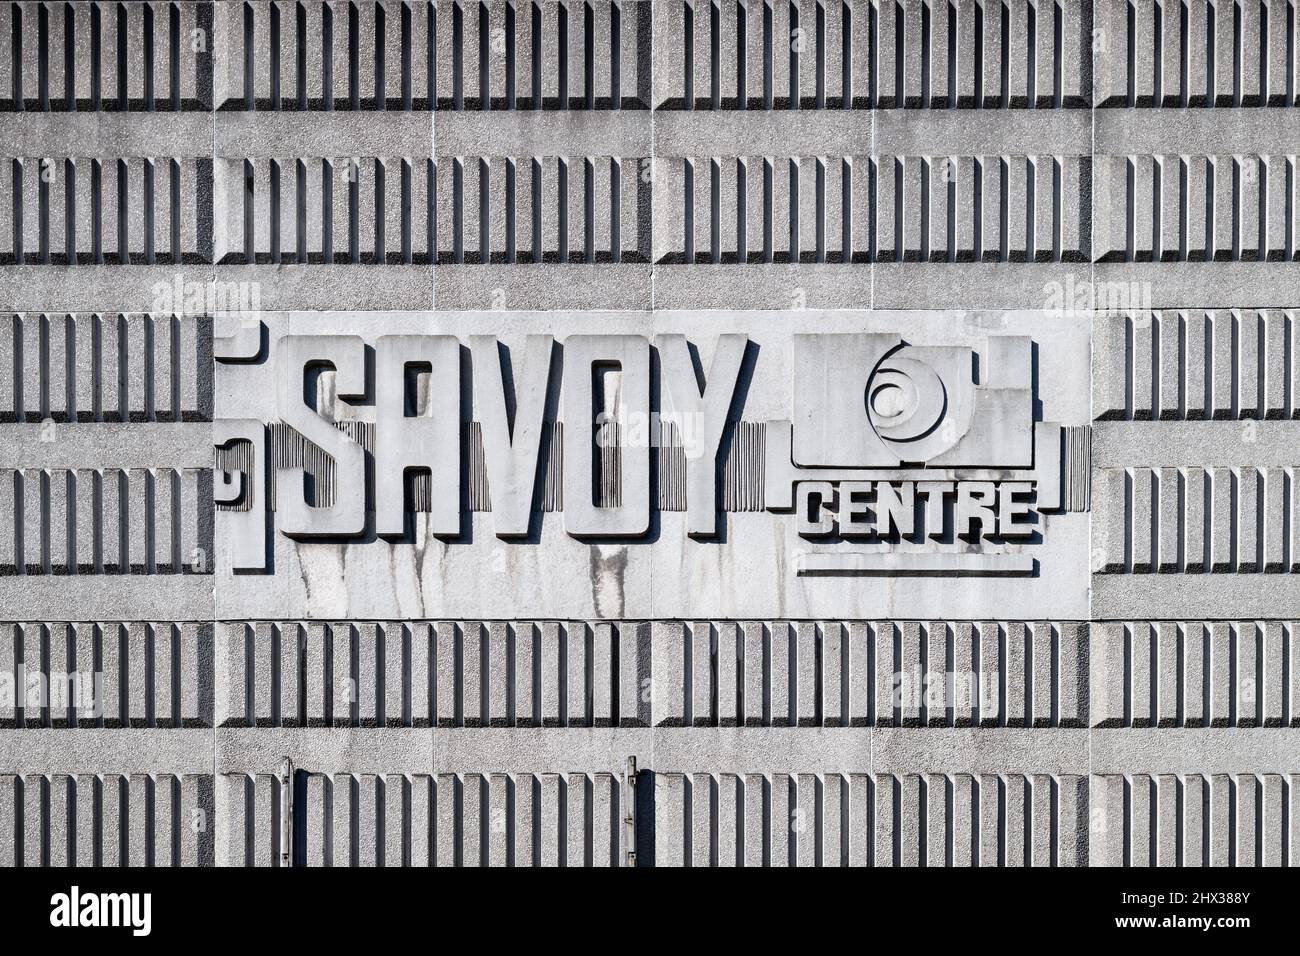 Savoy Centre Glasgow Scotland UK - architettura brutalista Foto Stock